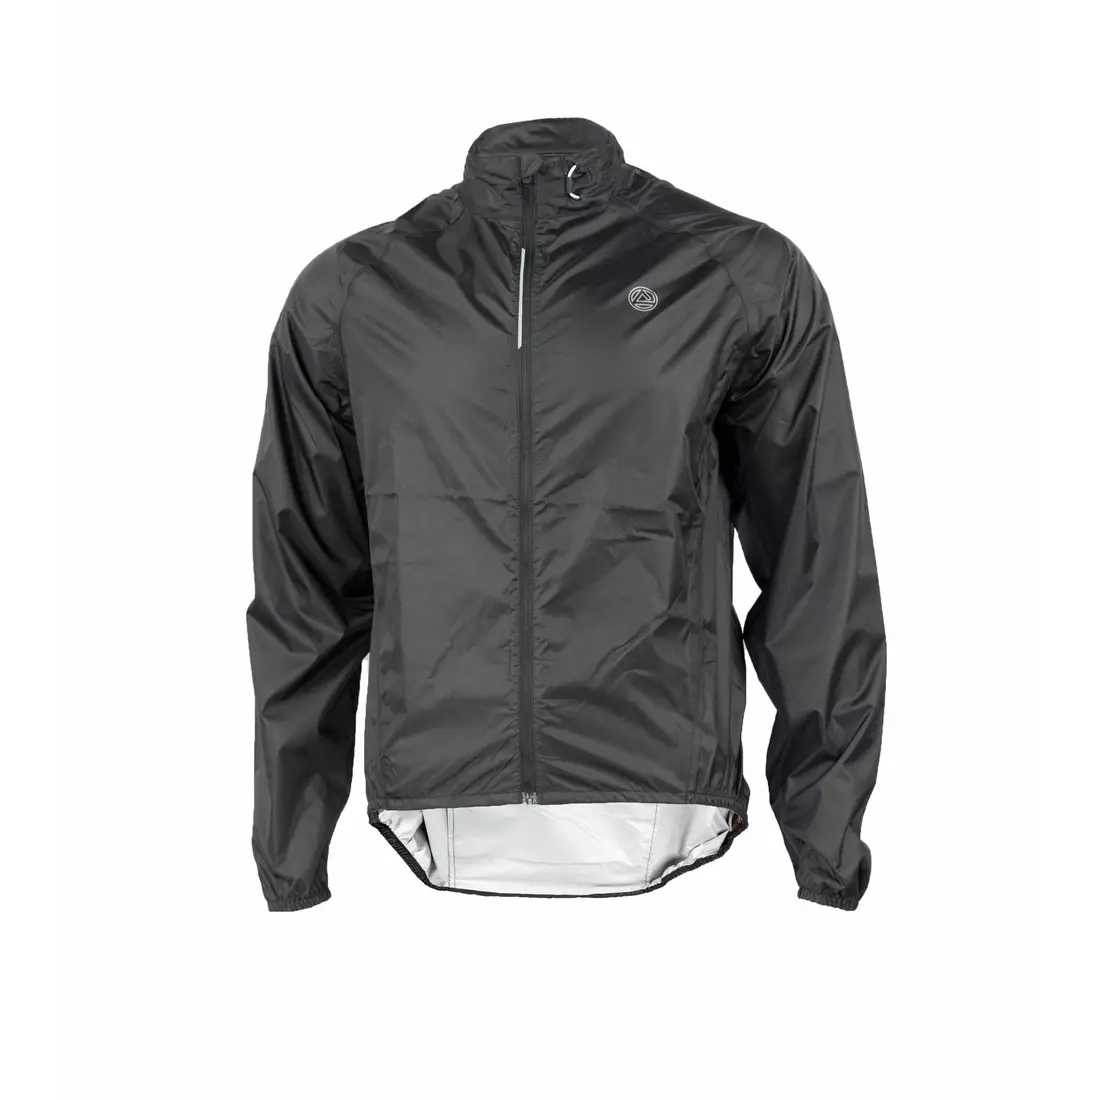 DARE2B AFFUSION JACKET - light rainproof jacket for cycling, black DMW096-800